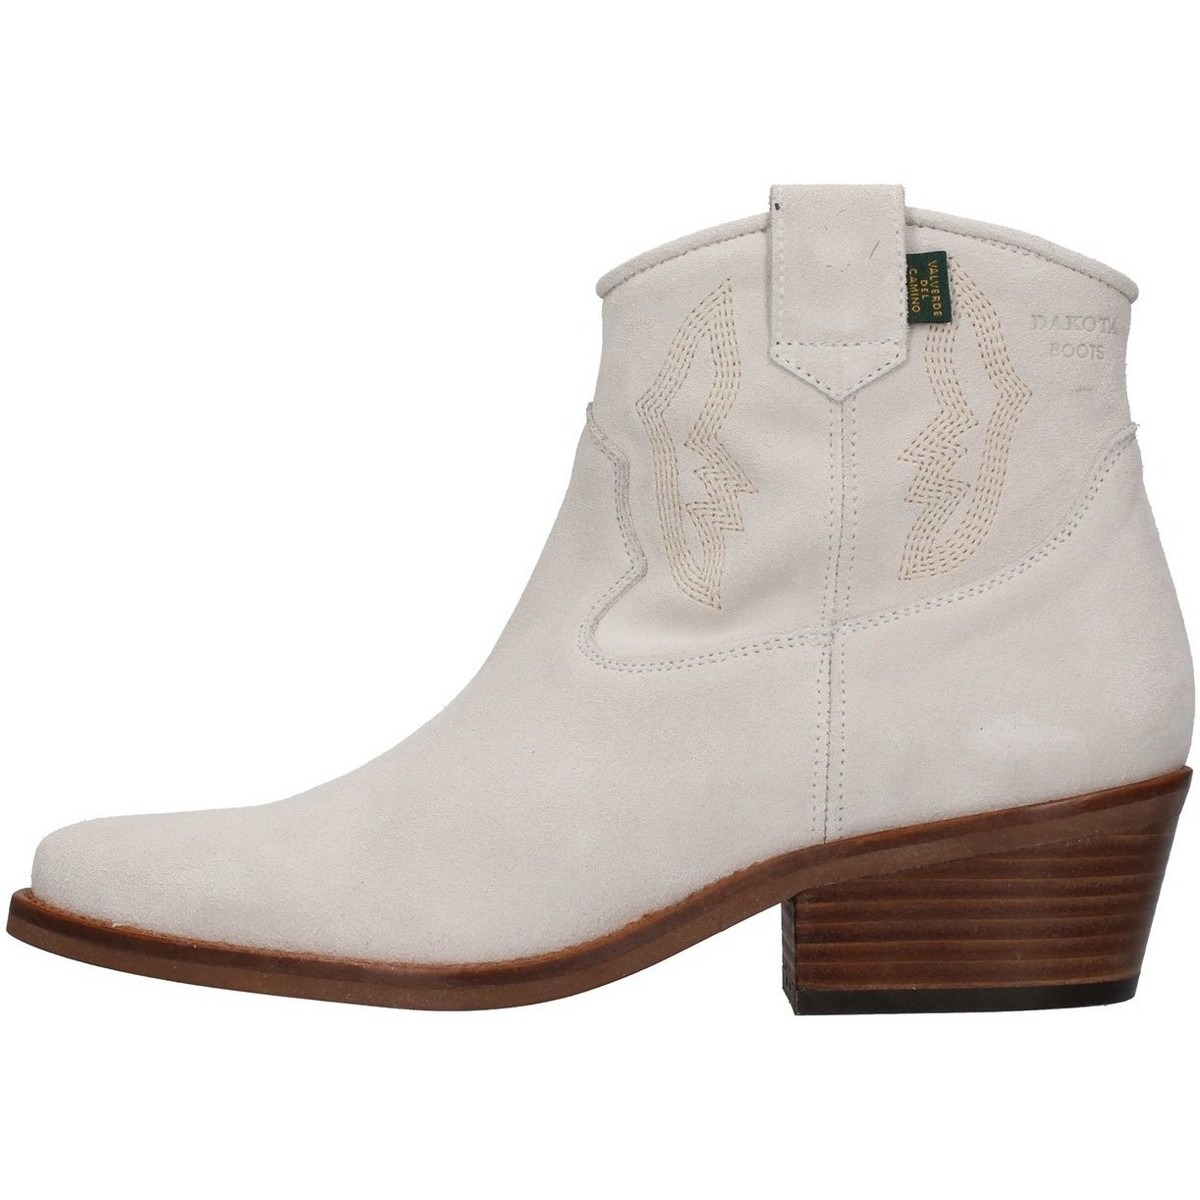 Ankle Boots in White - Spartoo - Woman - Dakota Boots GOOFASH